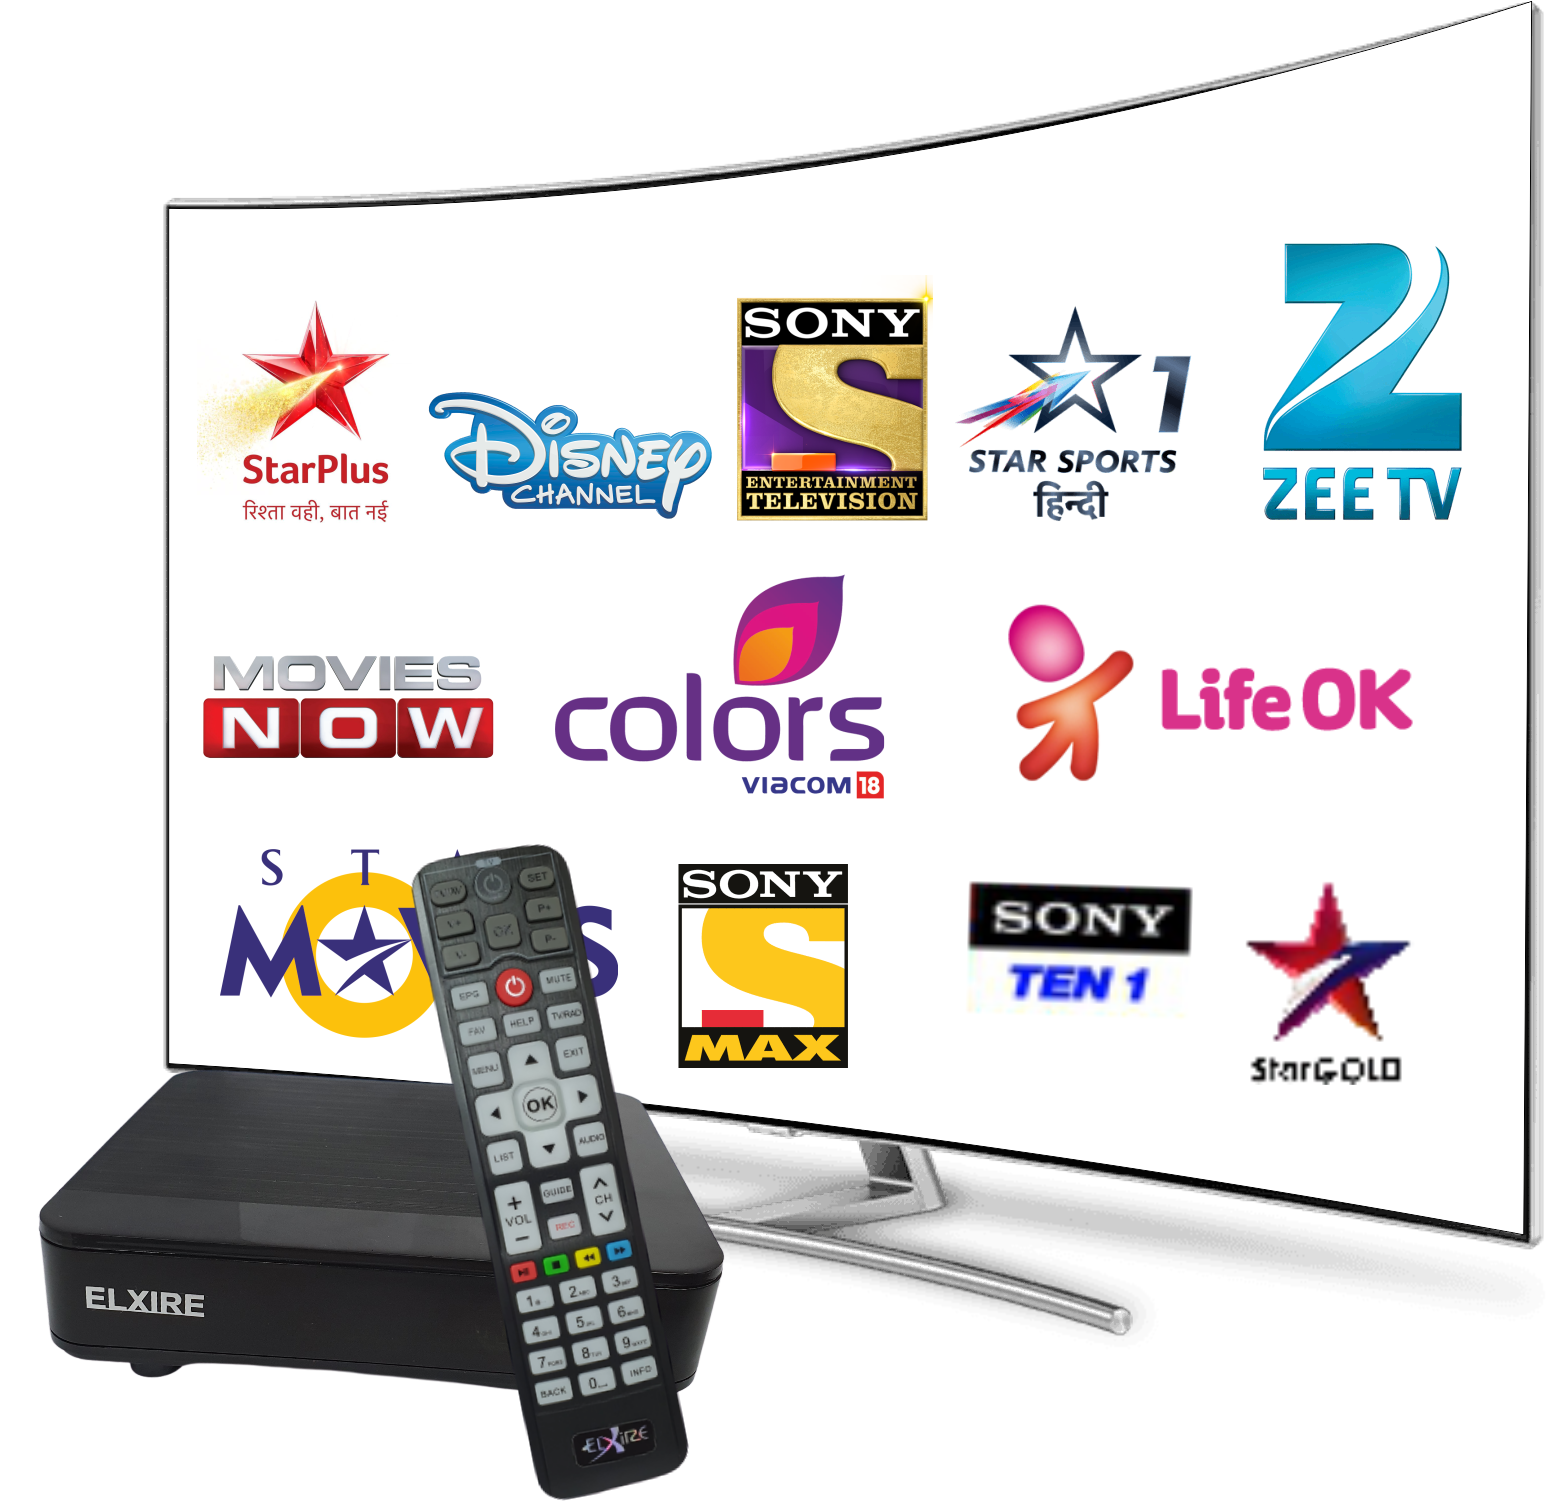 Elxire Digital Cable TV Service Provider in Faridabad, India